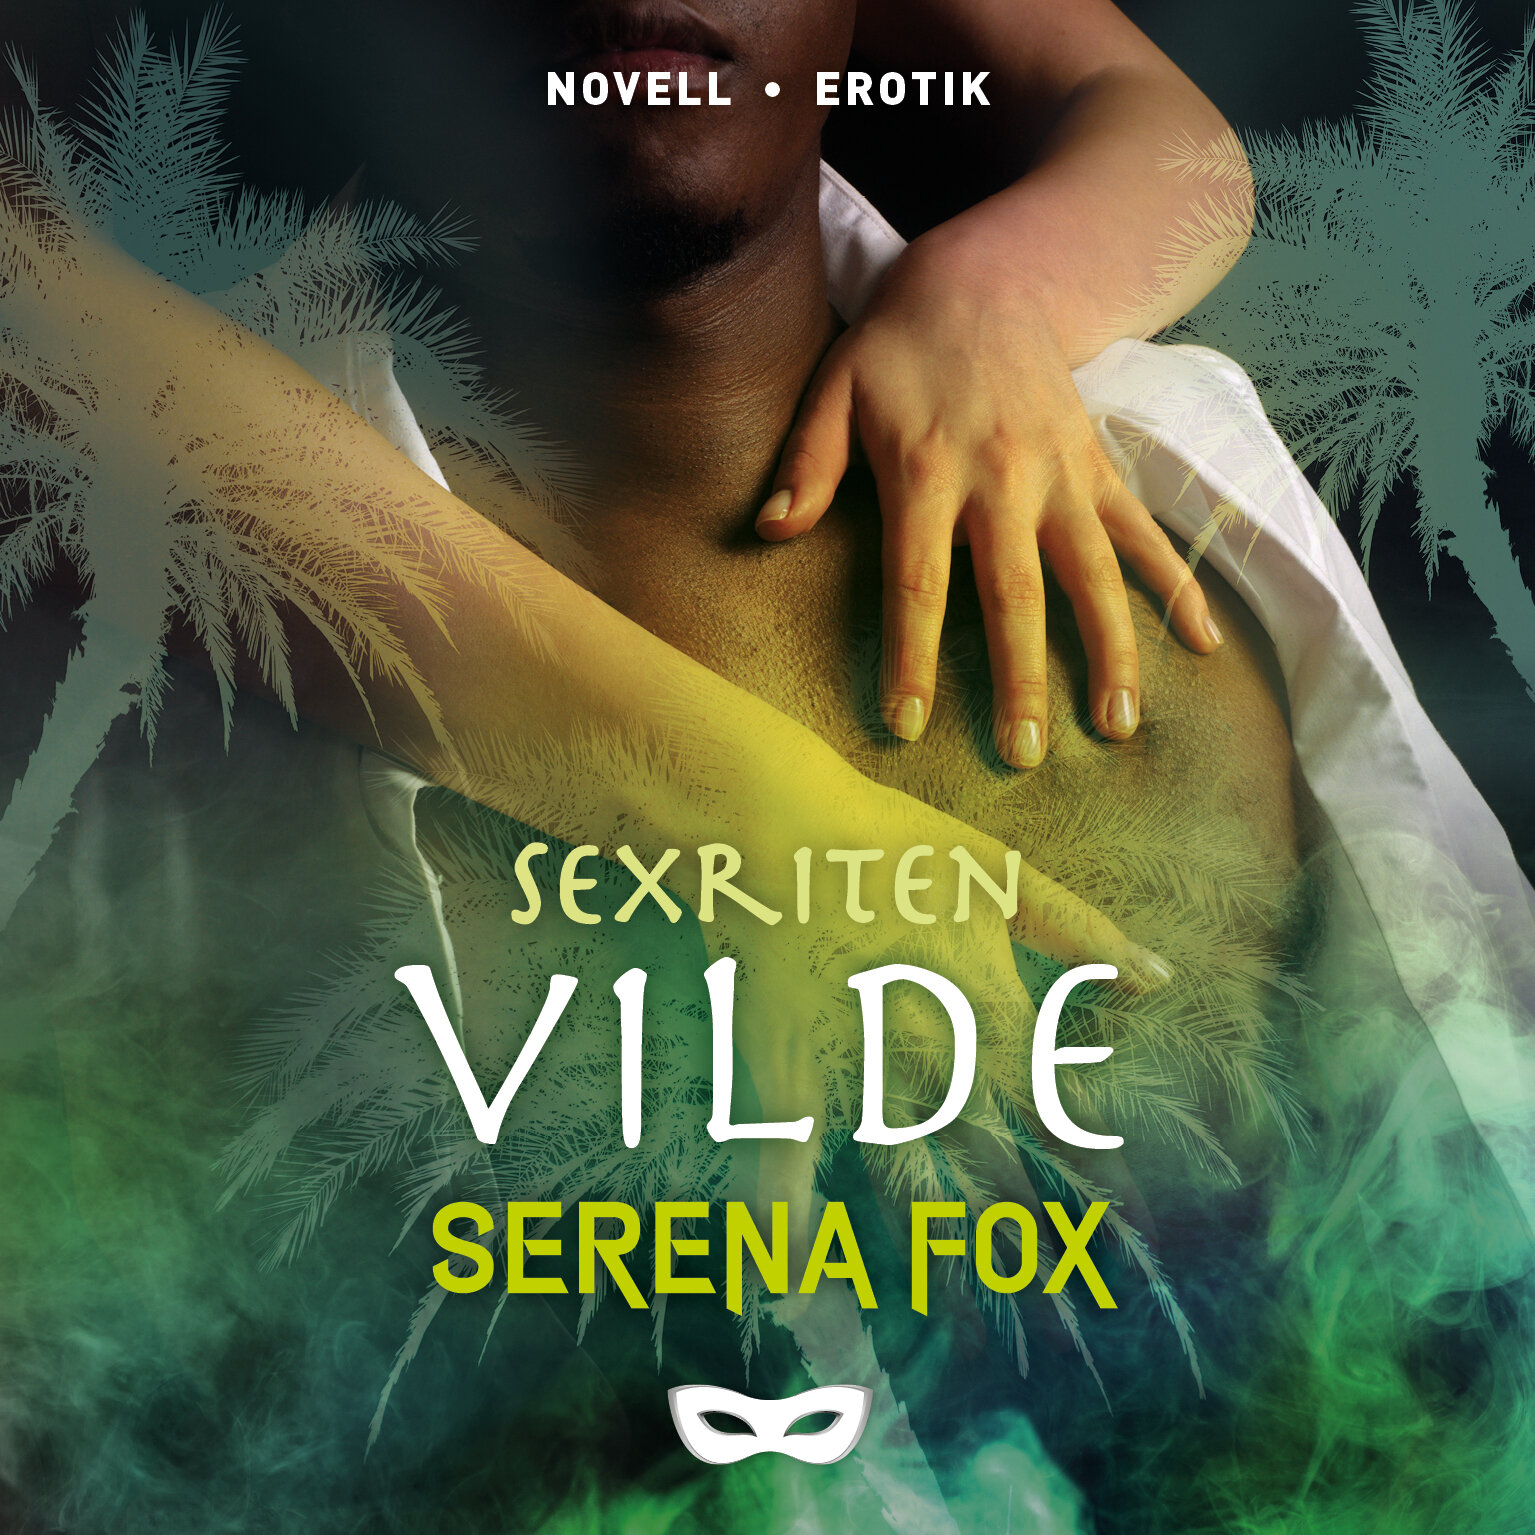 RITEN2 Serena Fox Sexriten Vilde omslag audio.jpg